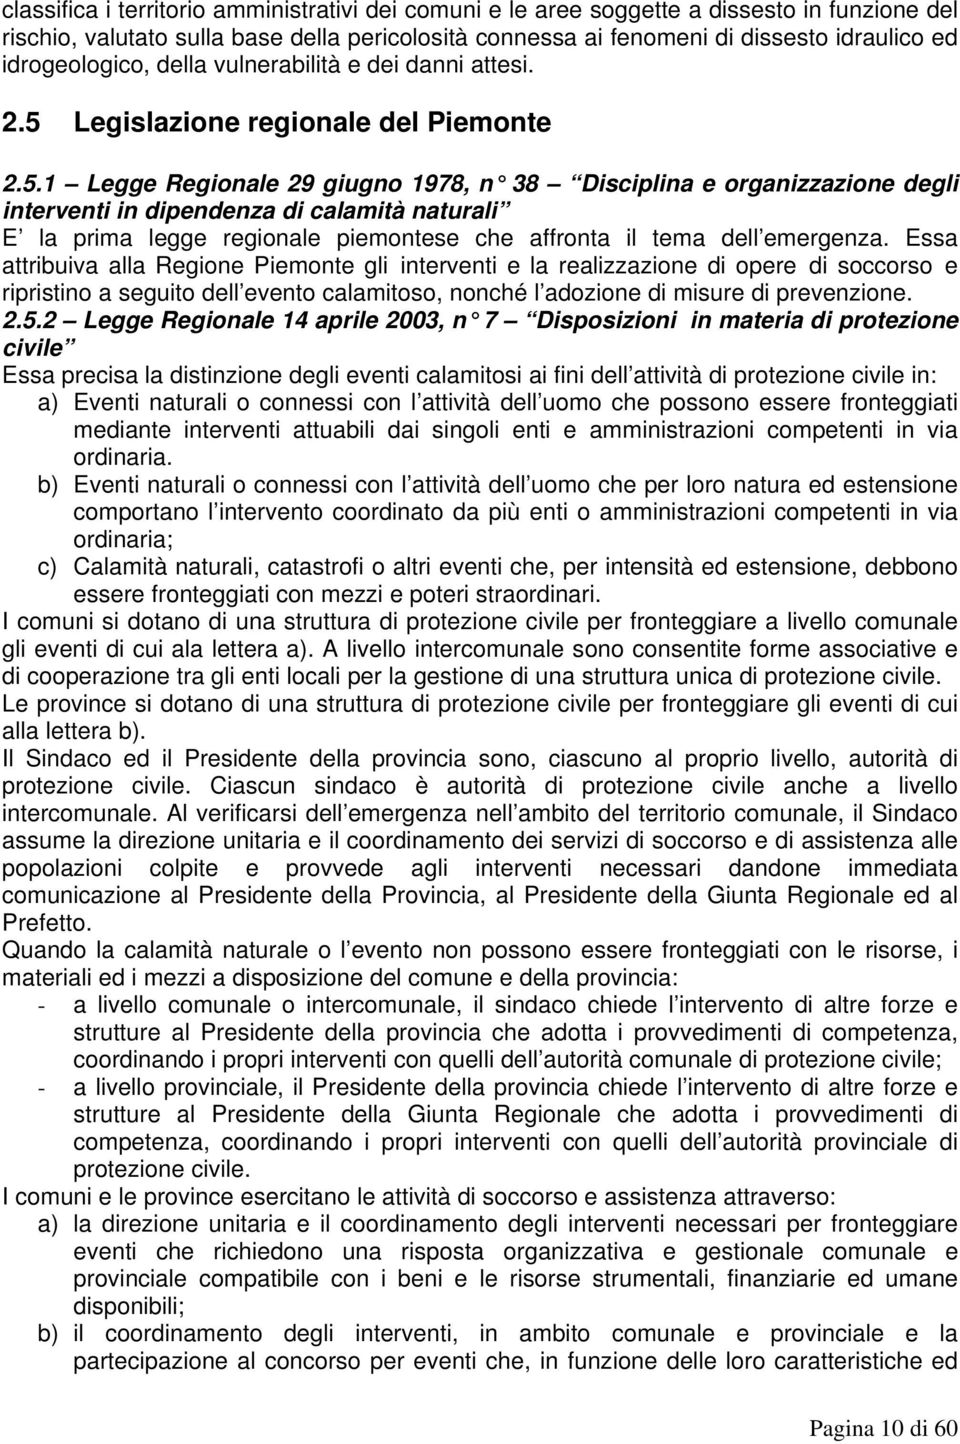 Legislazione regionale del Piemonte 2.5.